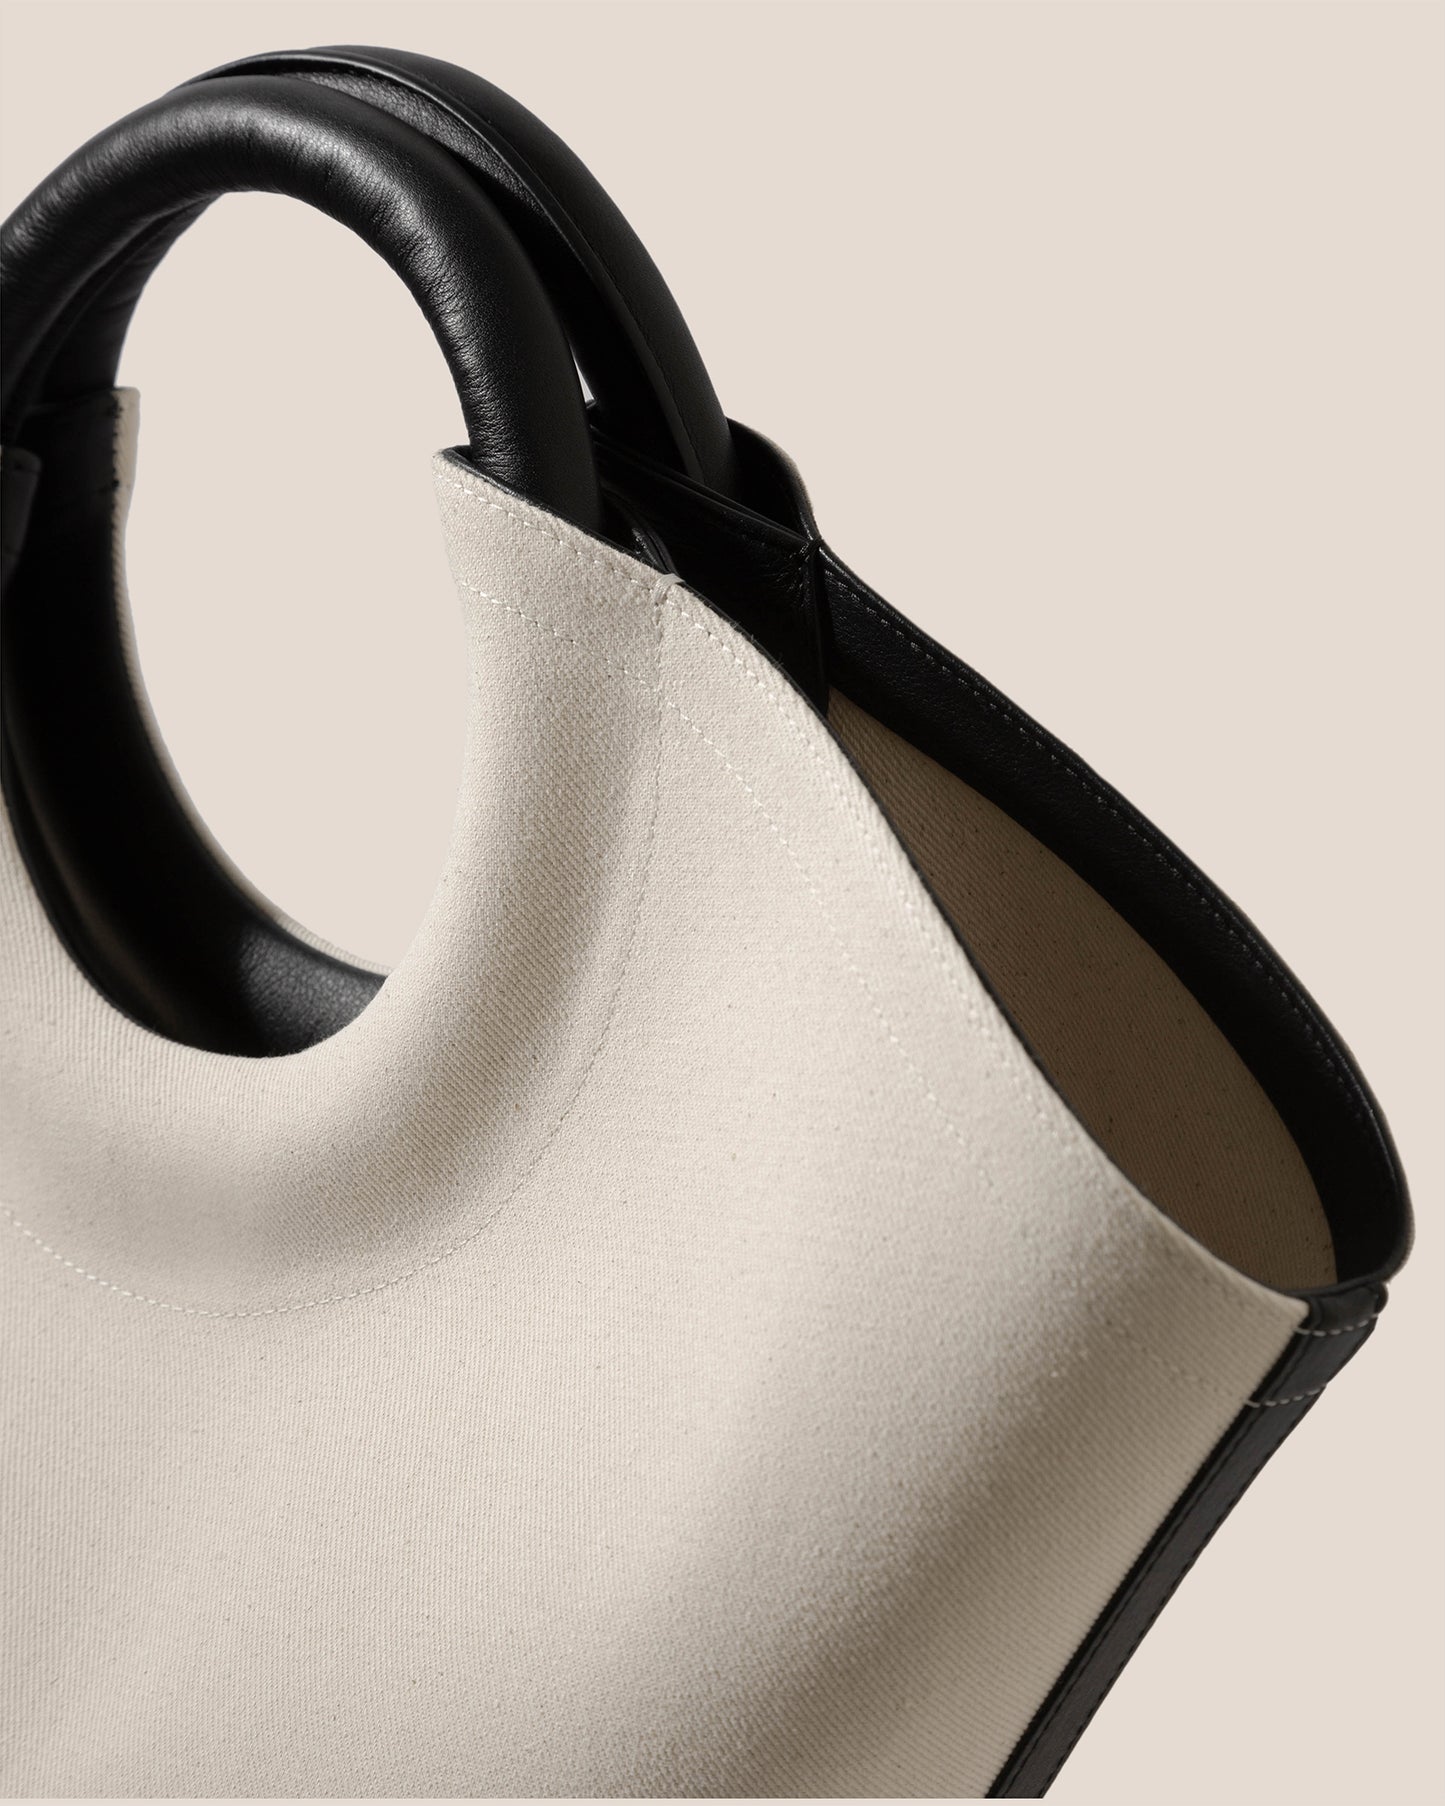 CABASSA CANVAS - Round-handle Canvas Tote Bag